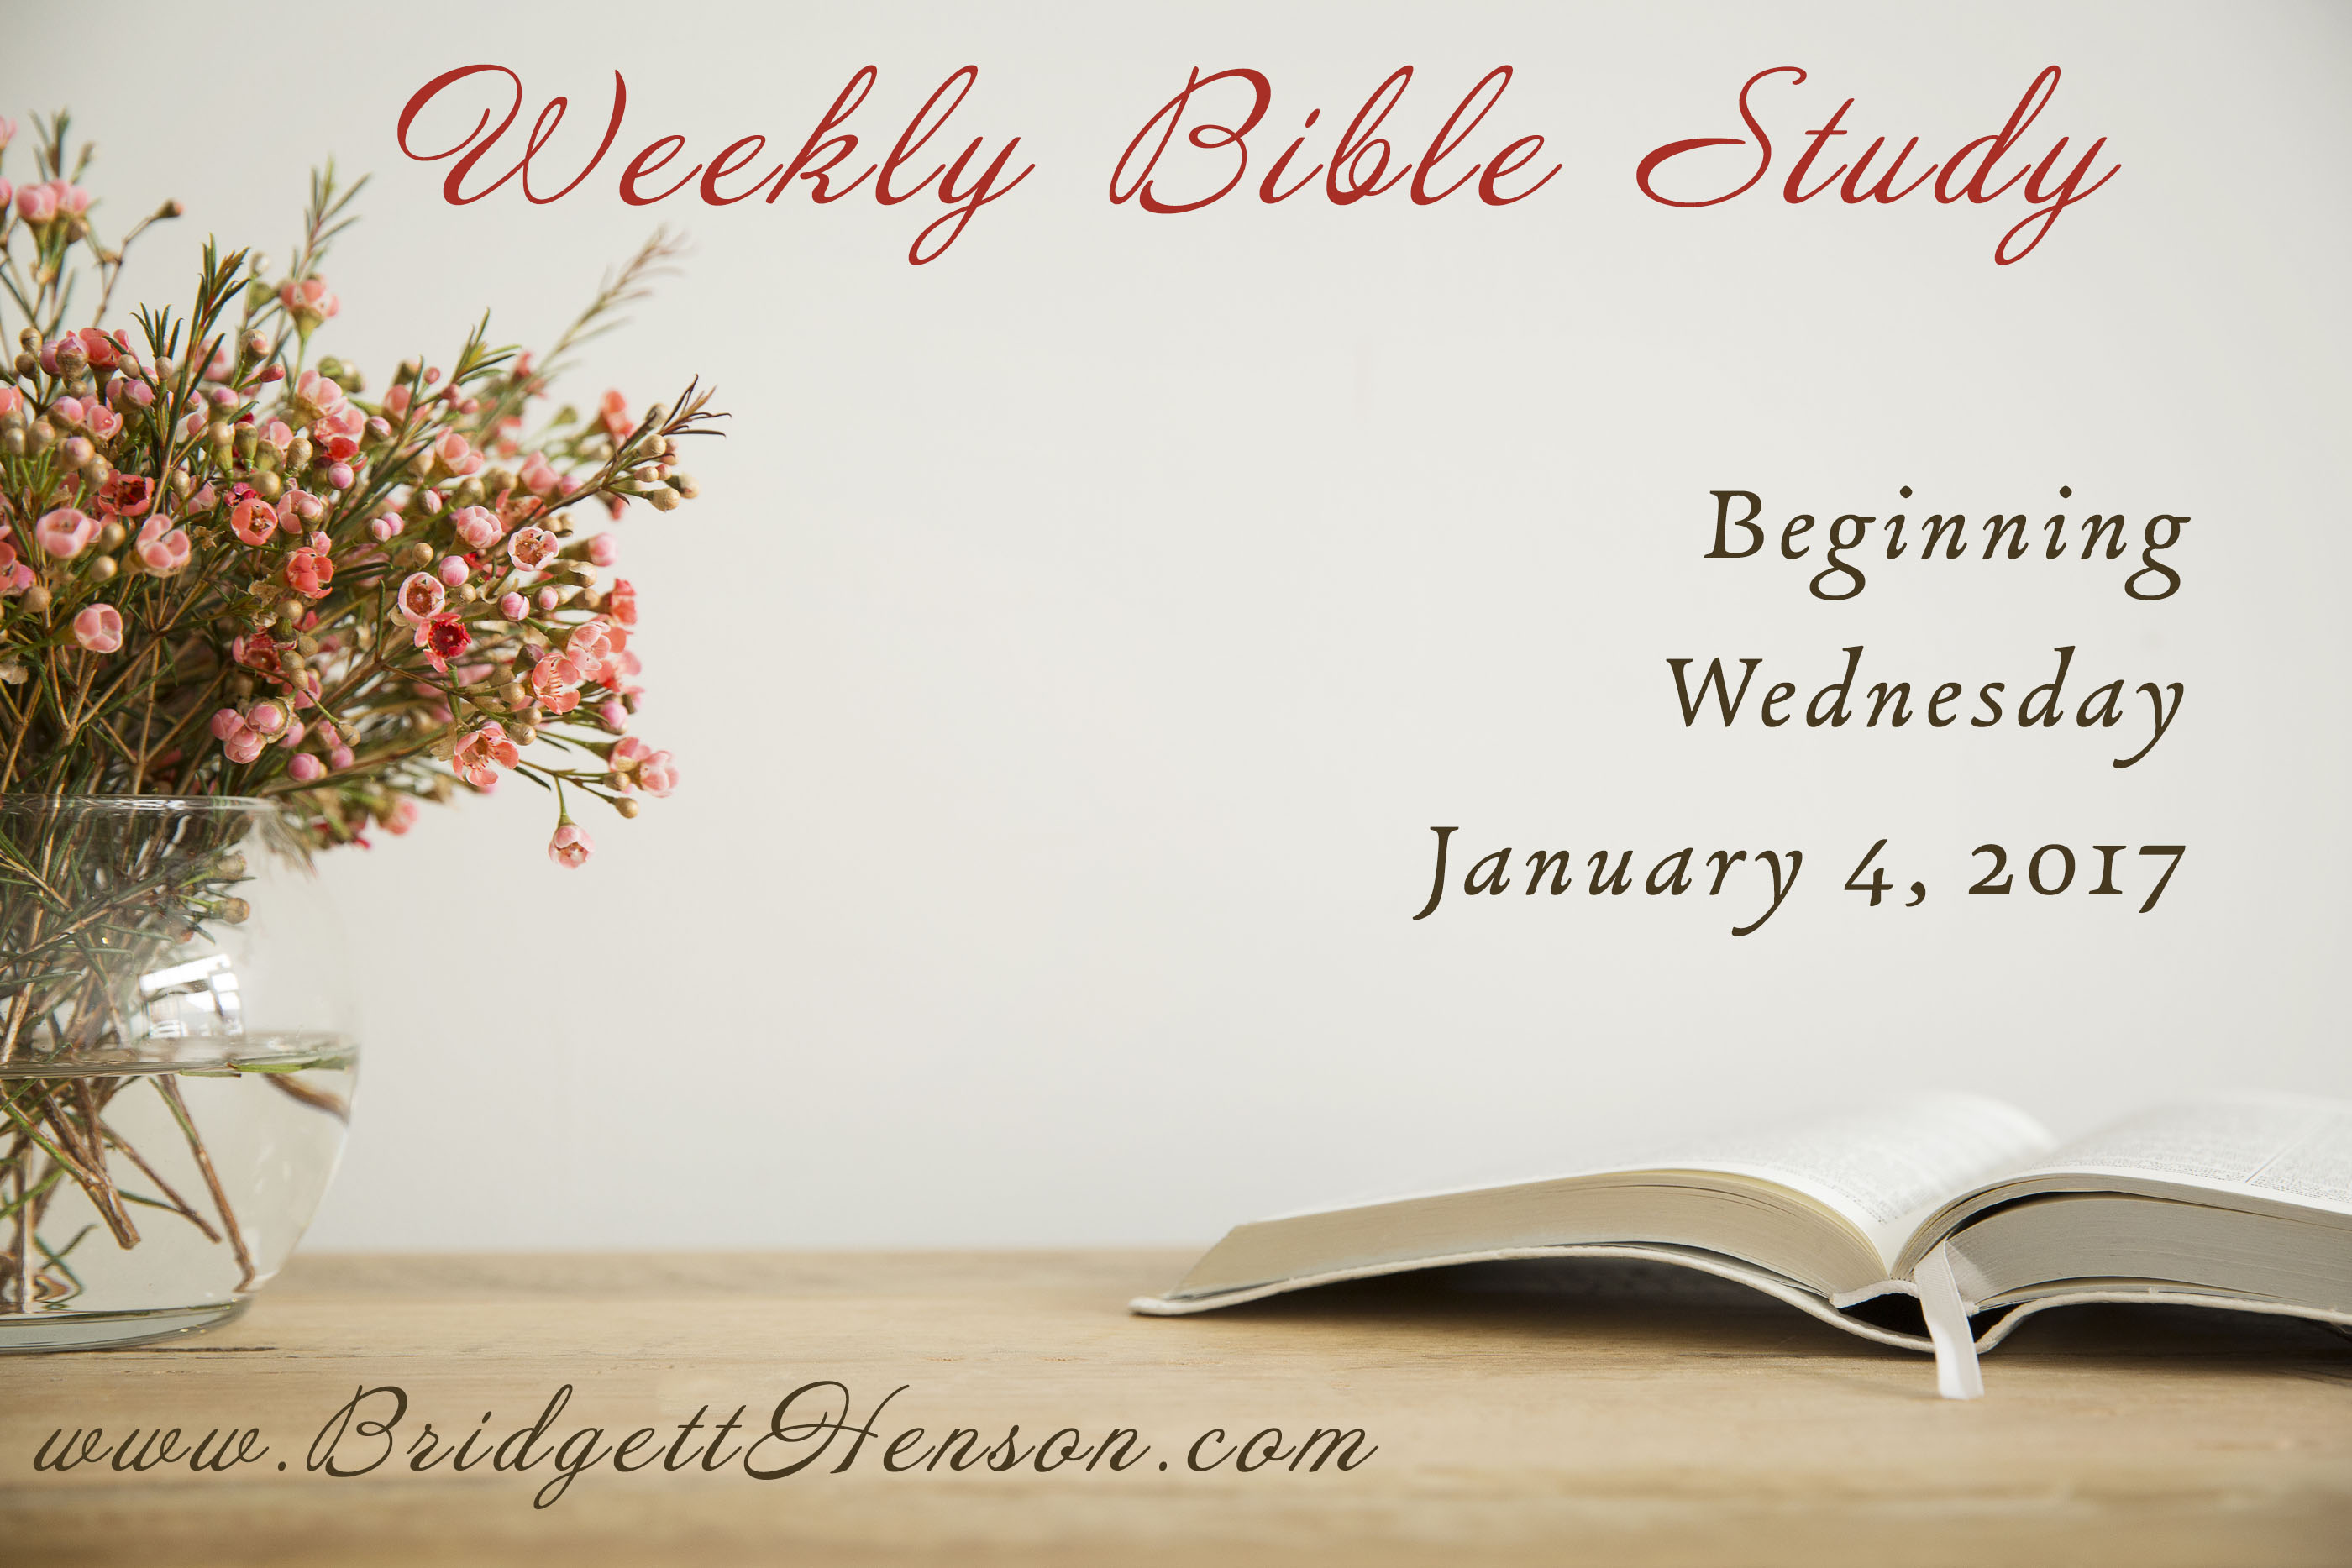 Weekly Bible study beginning Wednesday January 4, 2017